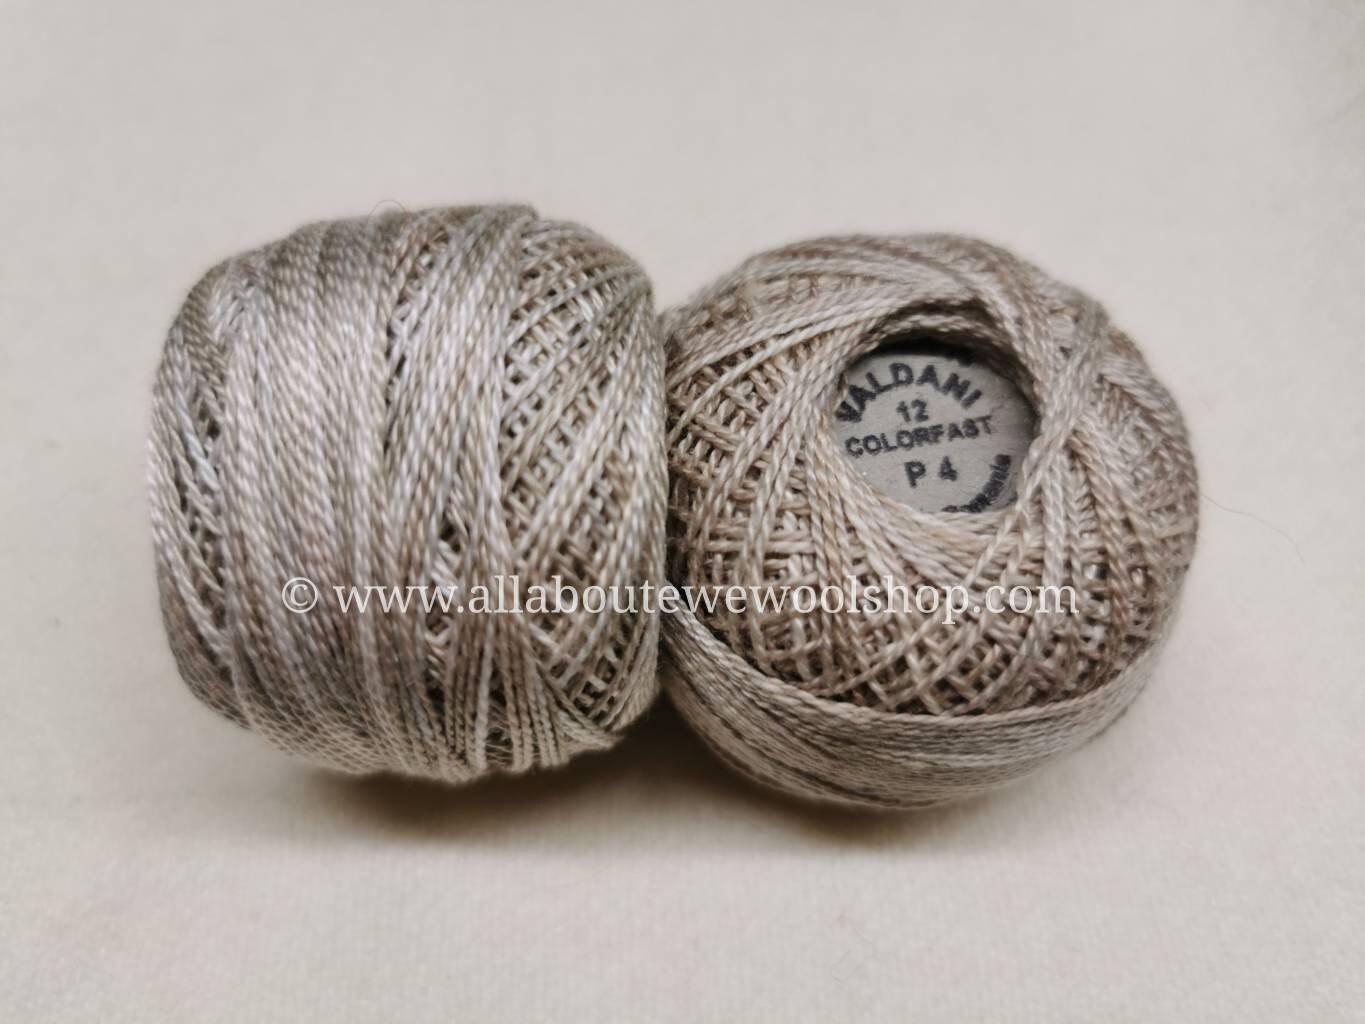 P4 #12 Valdani Pearl/Perle Cotton Thread - All About Ewe Wool Shop